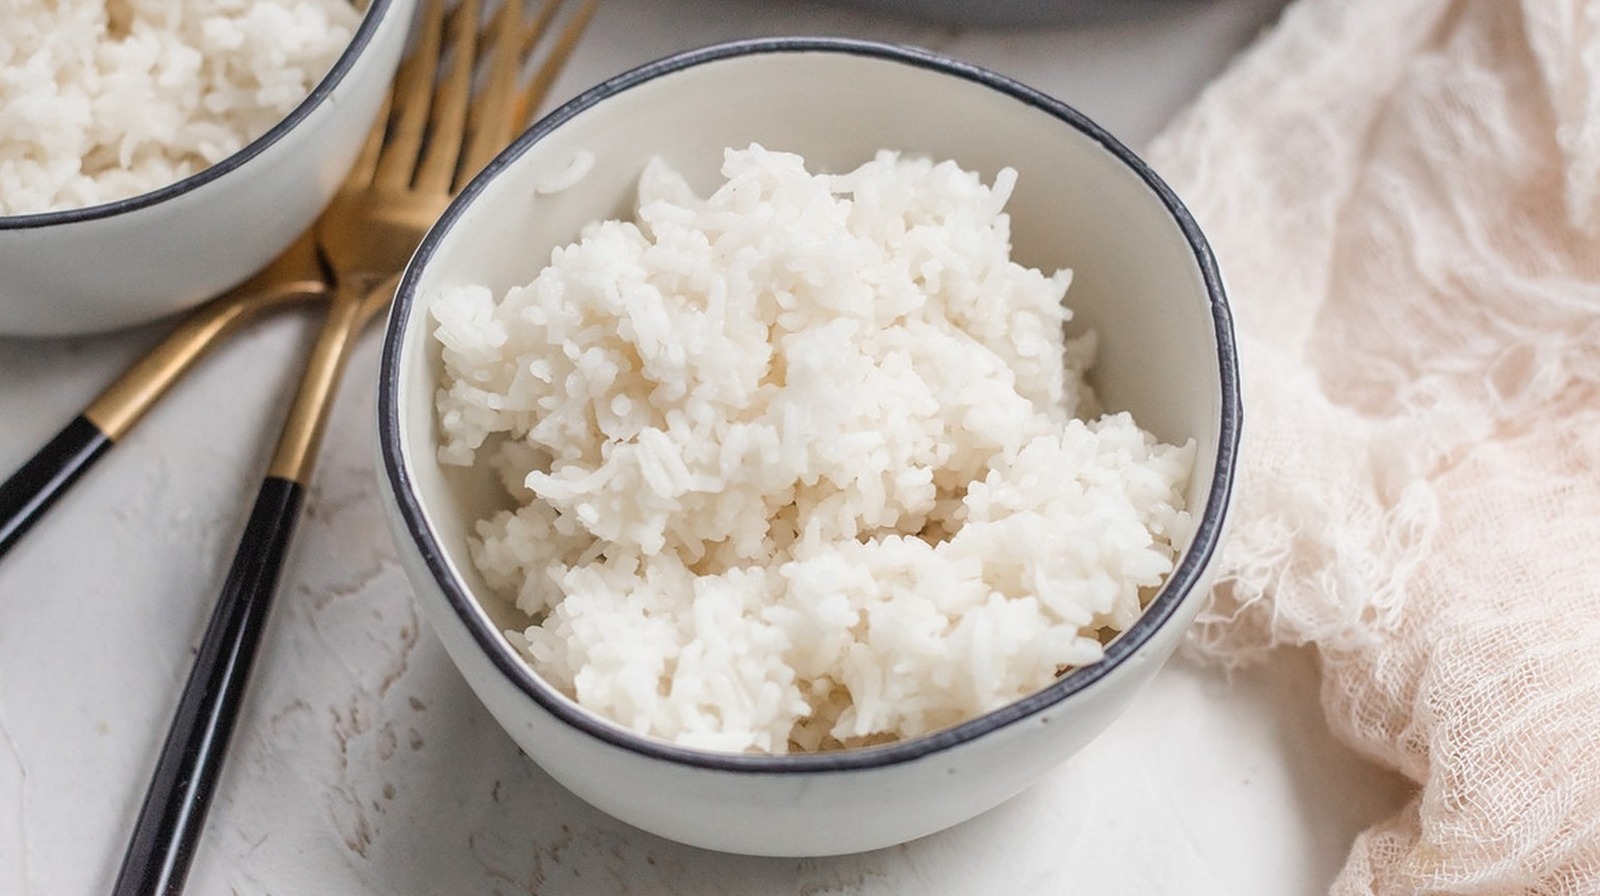 https://www.tastingtable.com/img/gallery/easy-instant-pot-rice-recipe/l-intro-1661708815.jpg